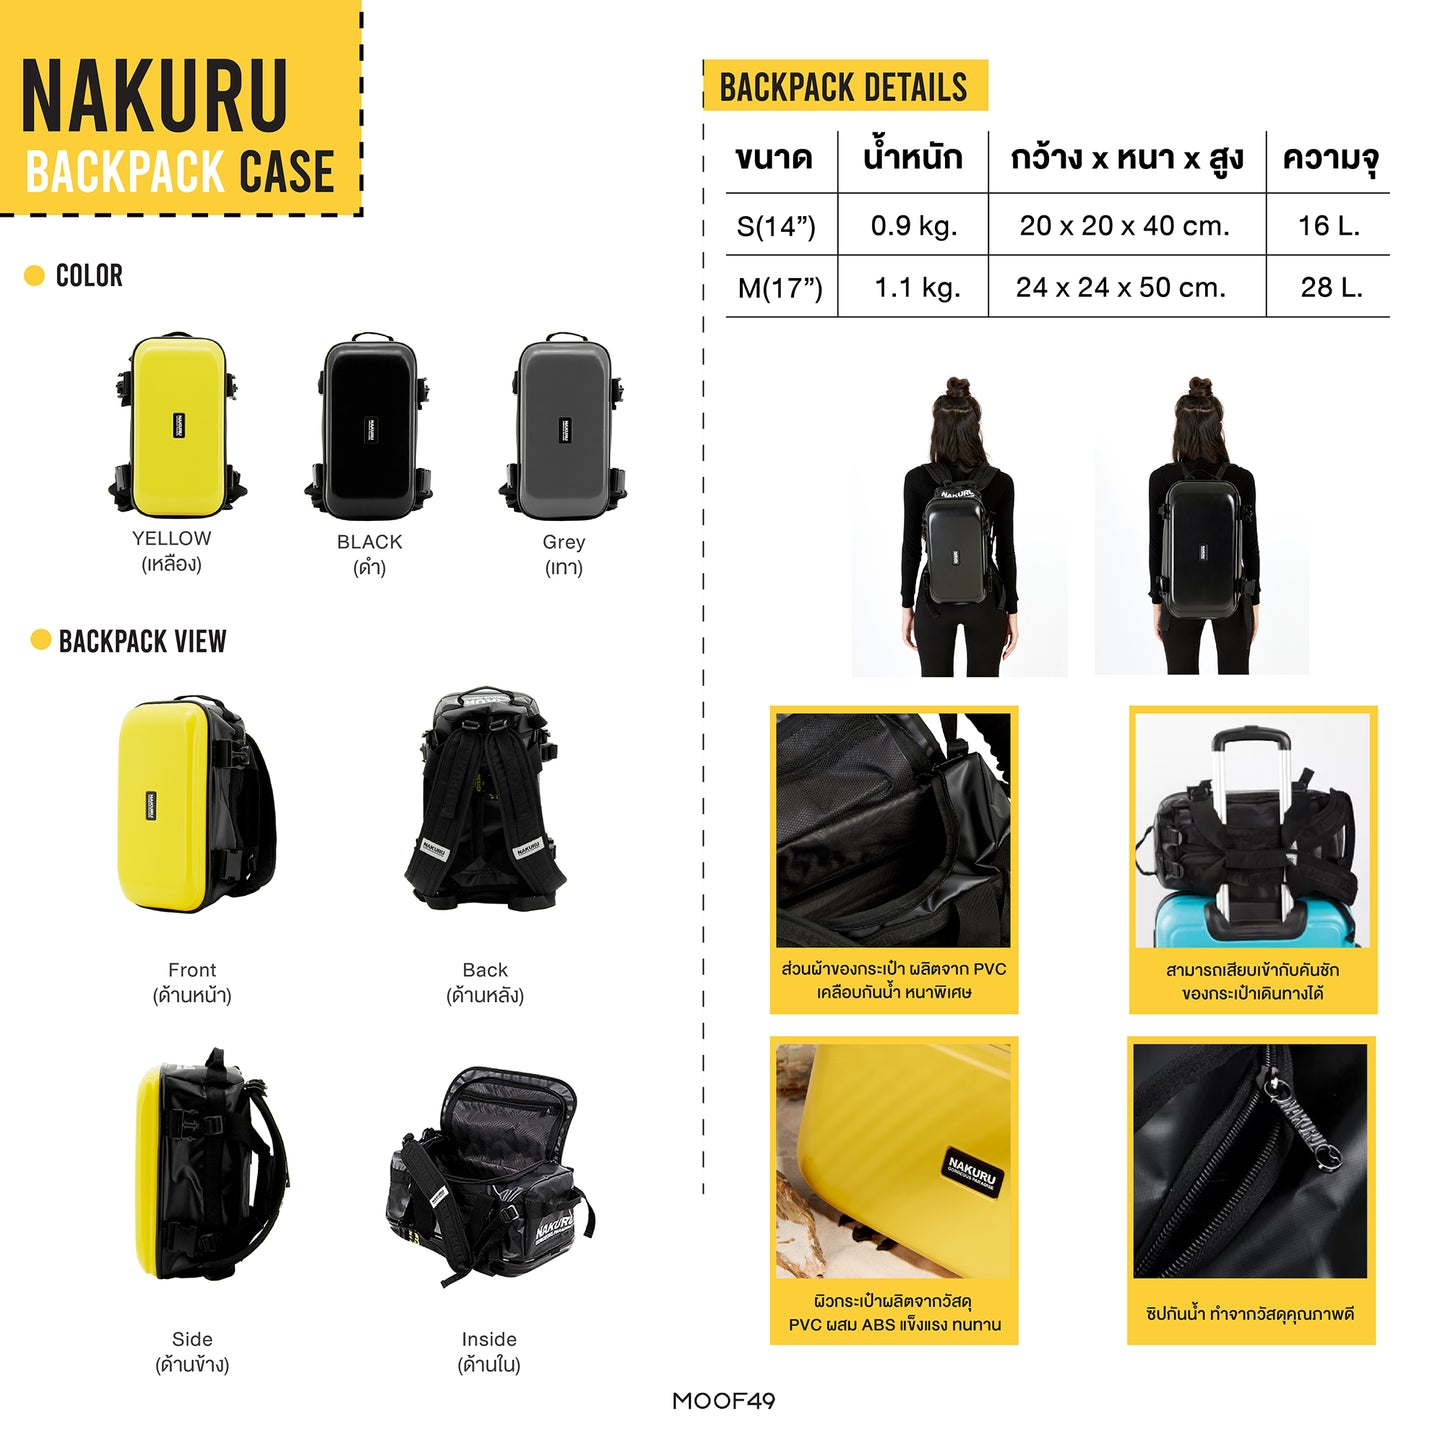 NAKURU BACKPACK CASE in Yellow